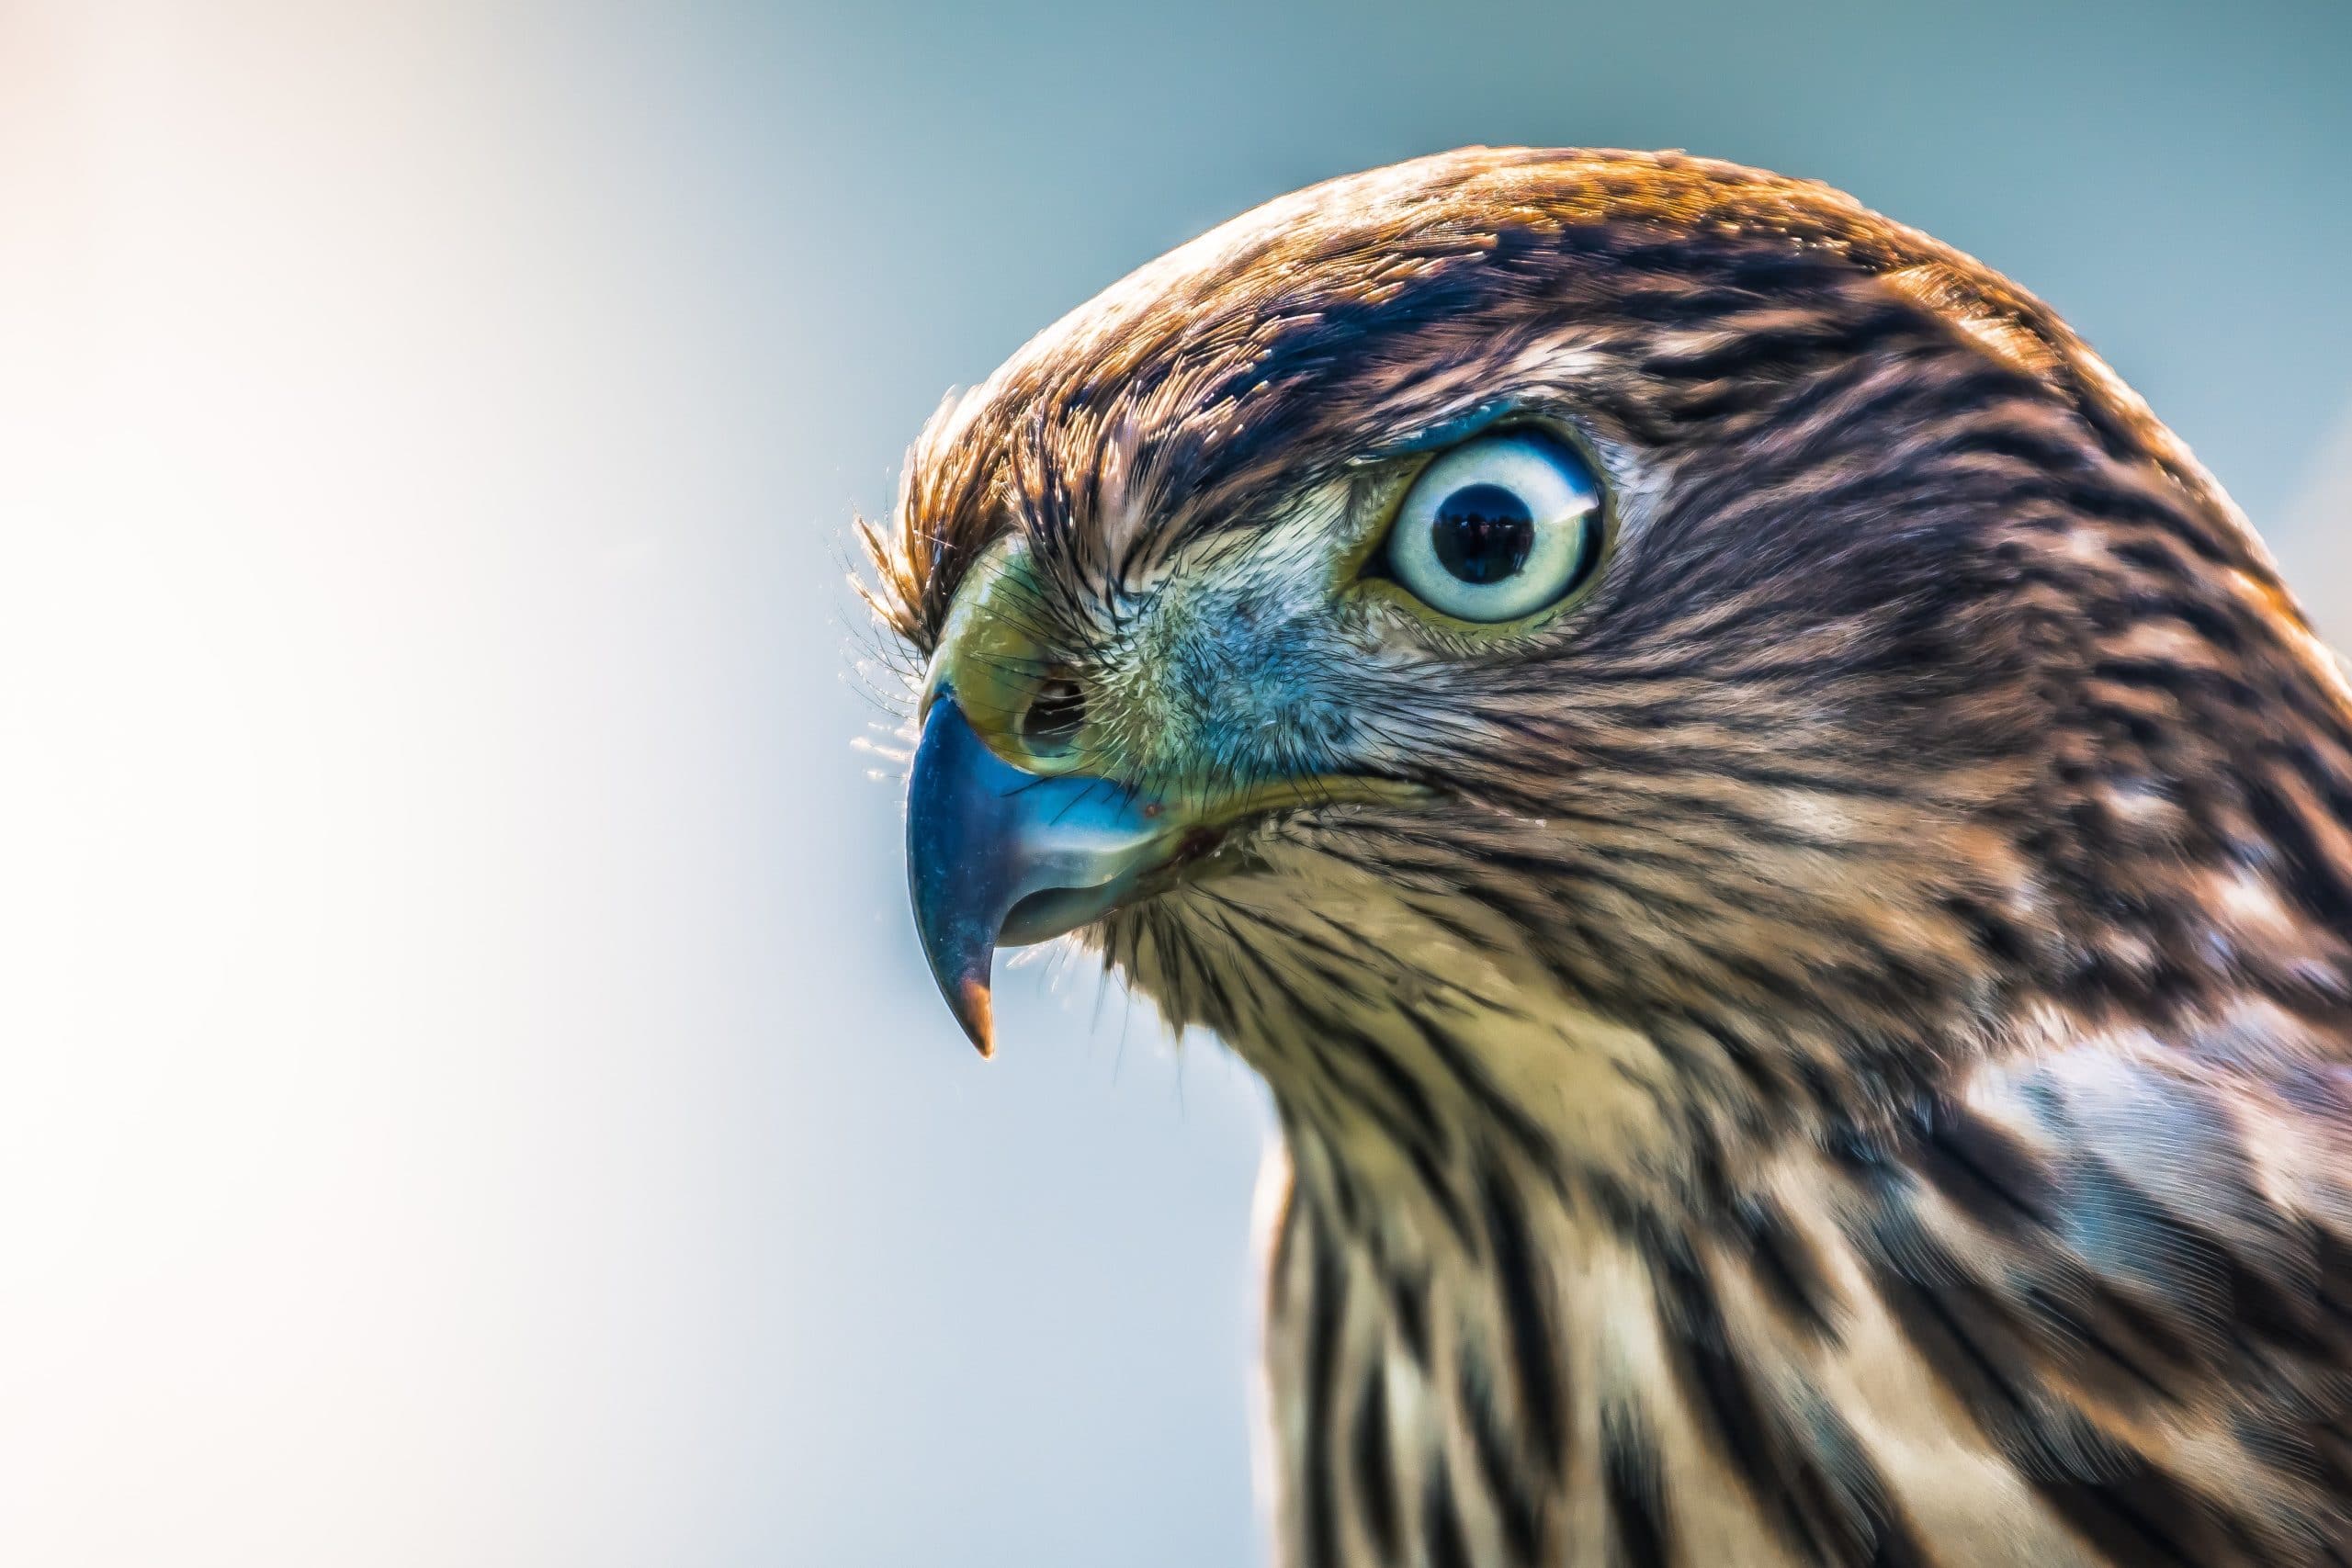 Close up photo of a hawk's head